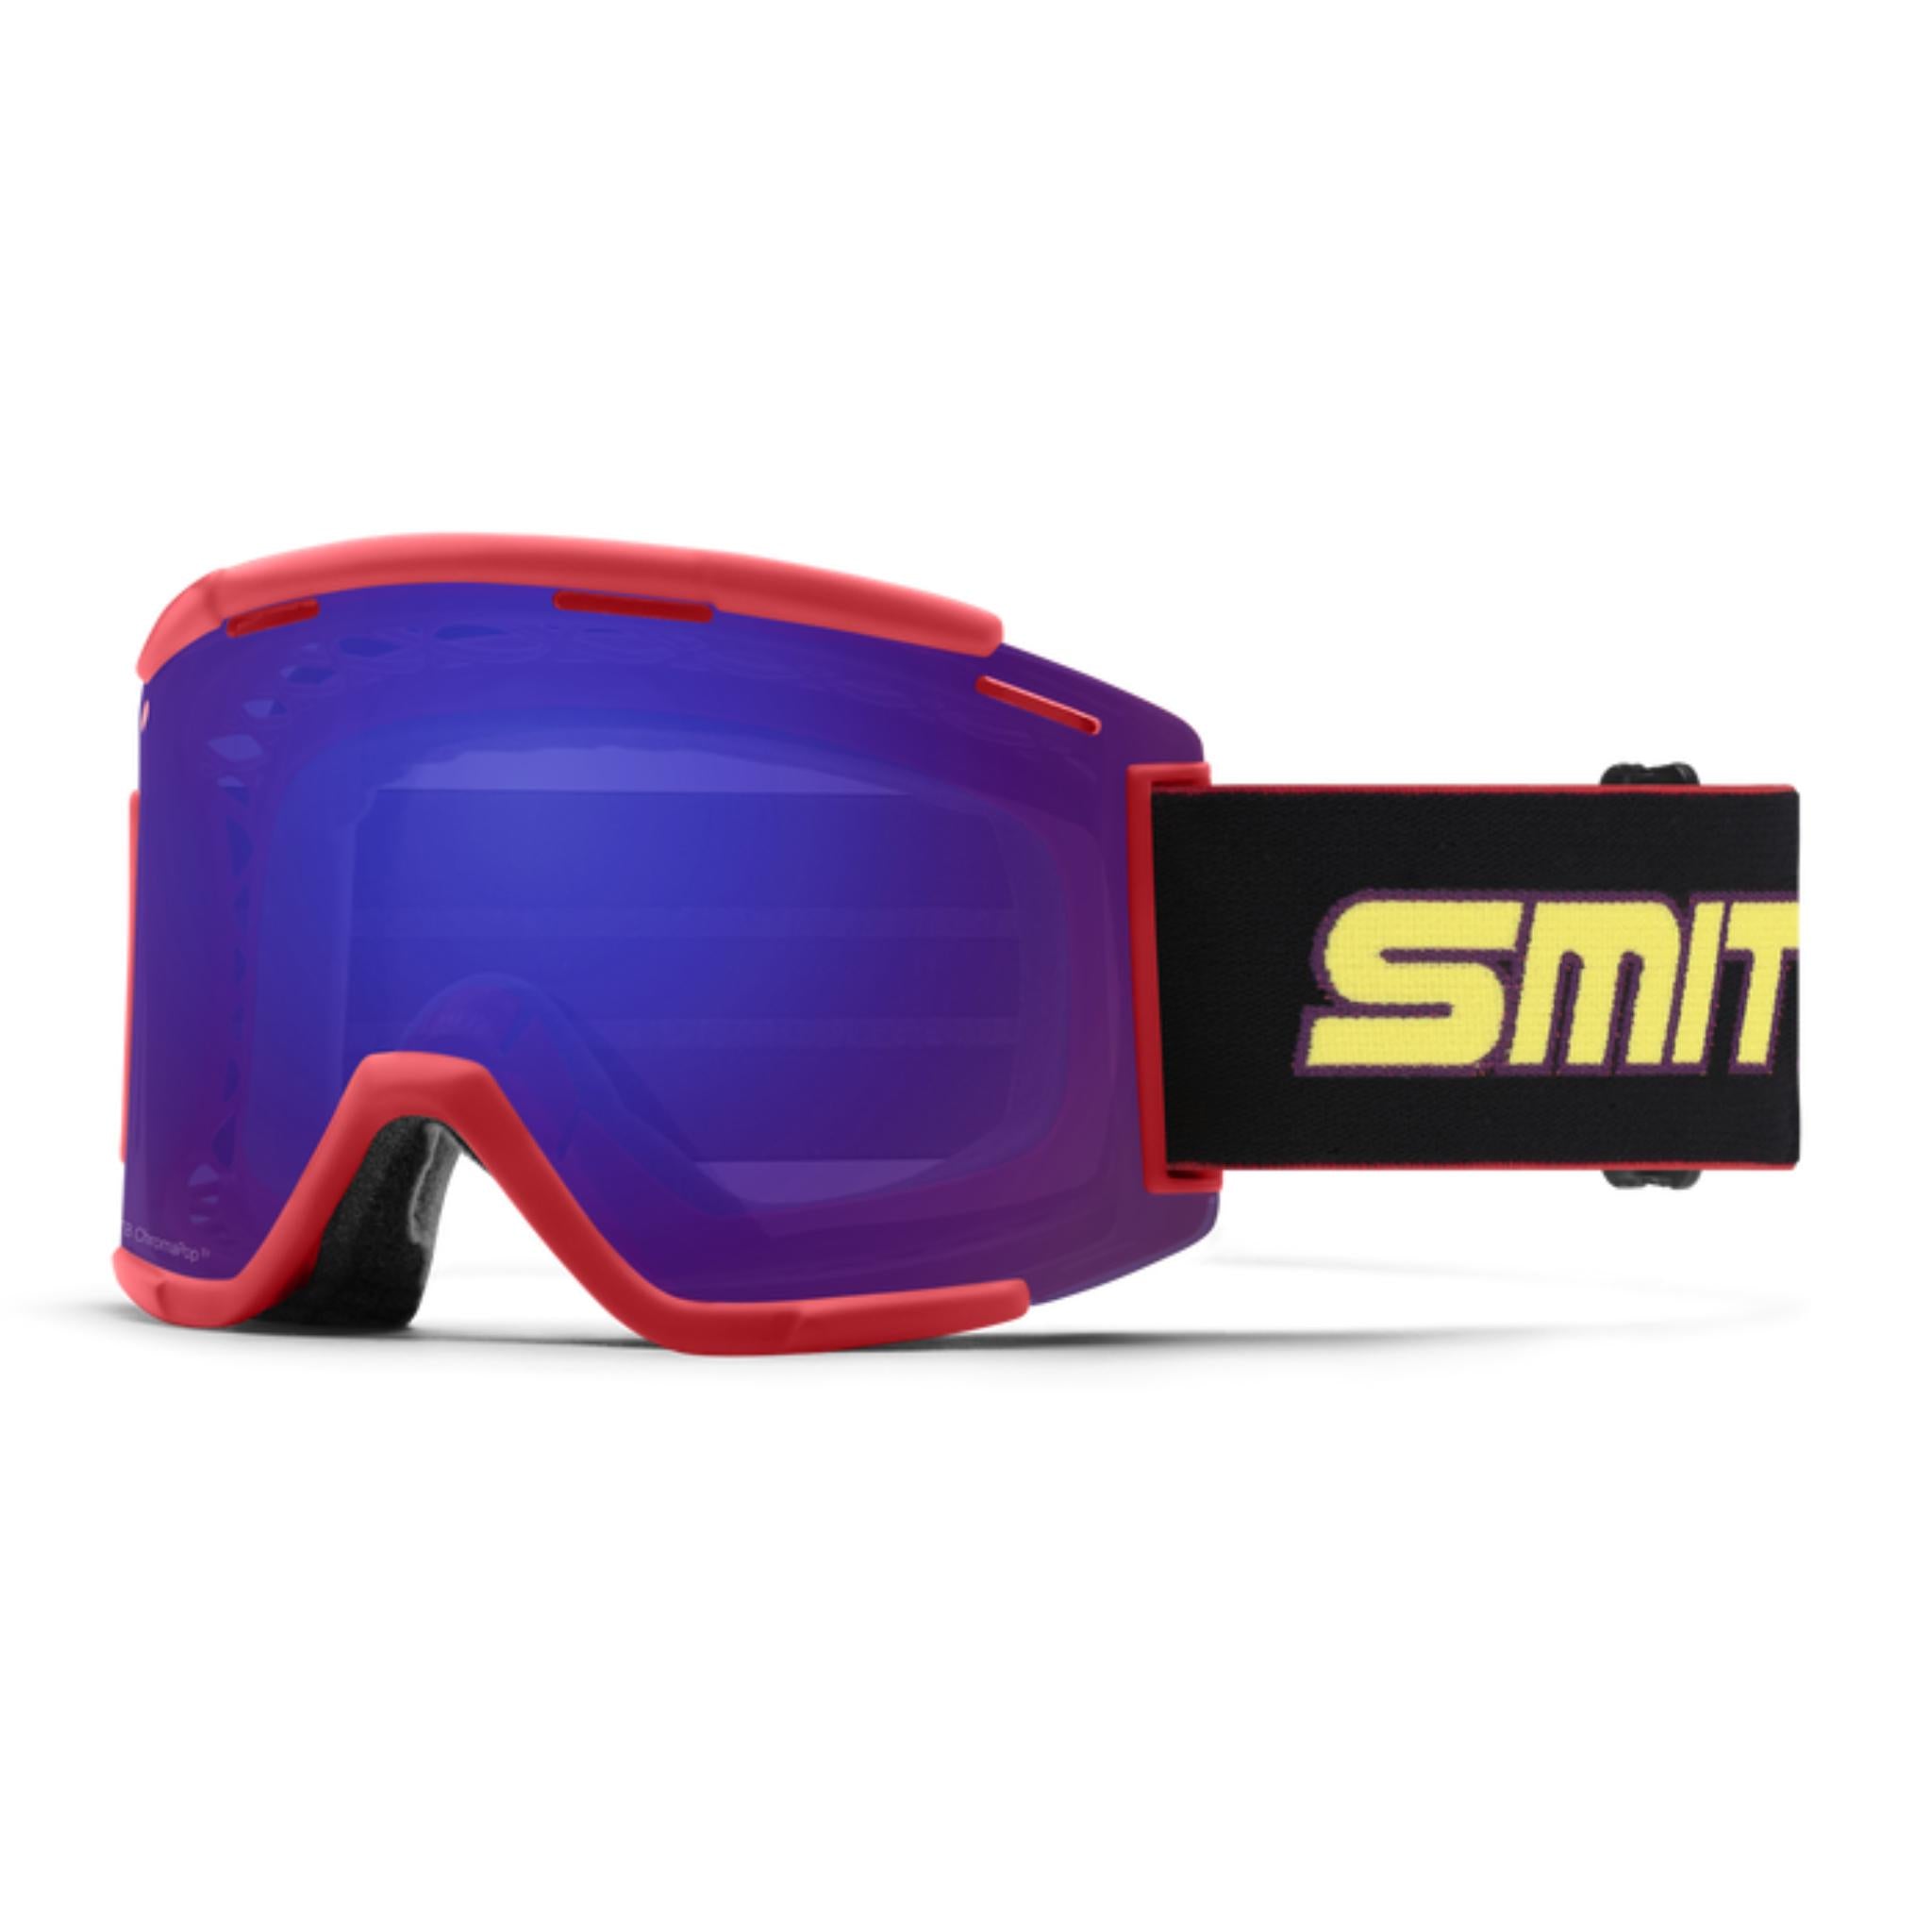 Smith Squad MTB XL Goggles